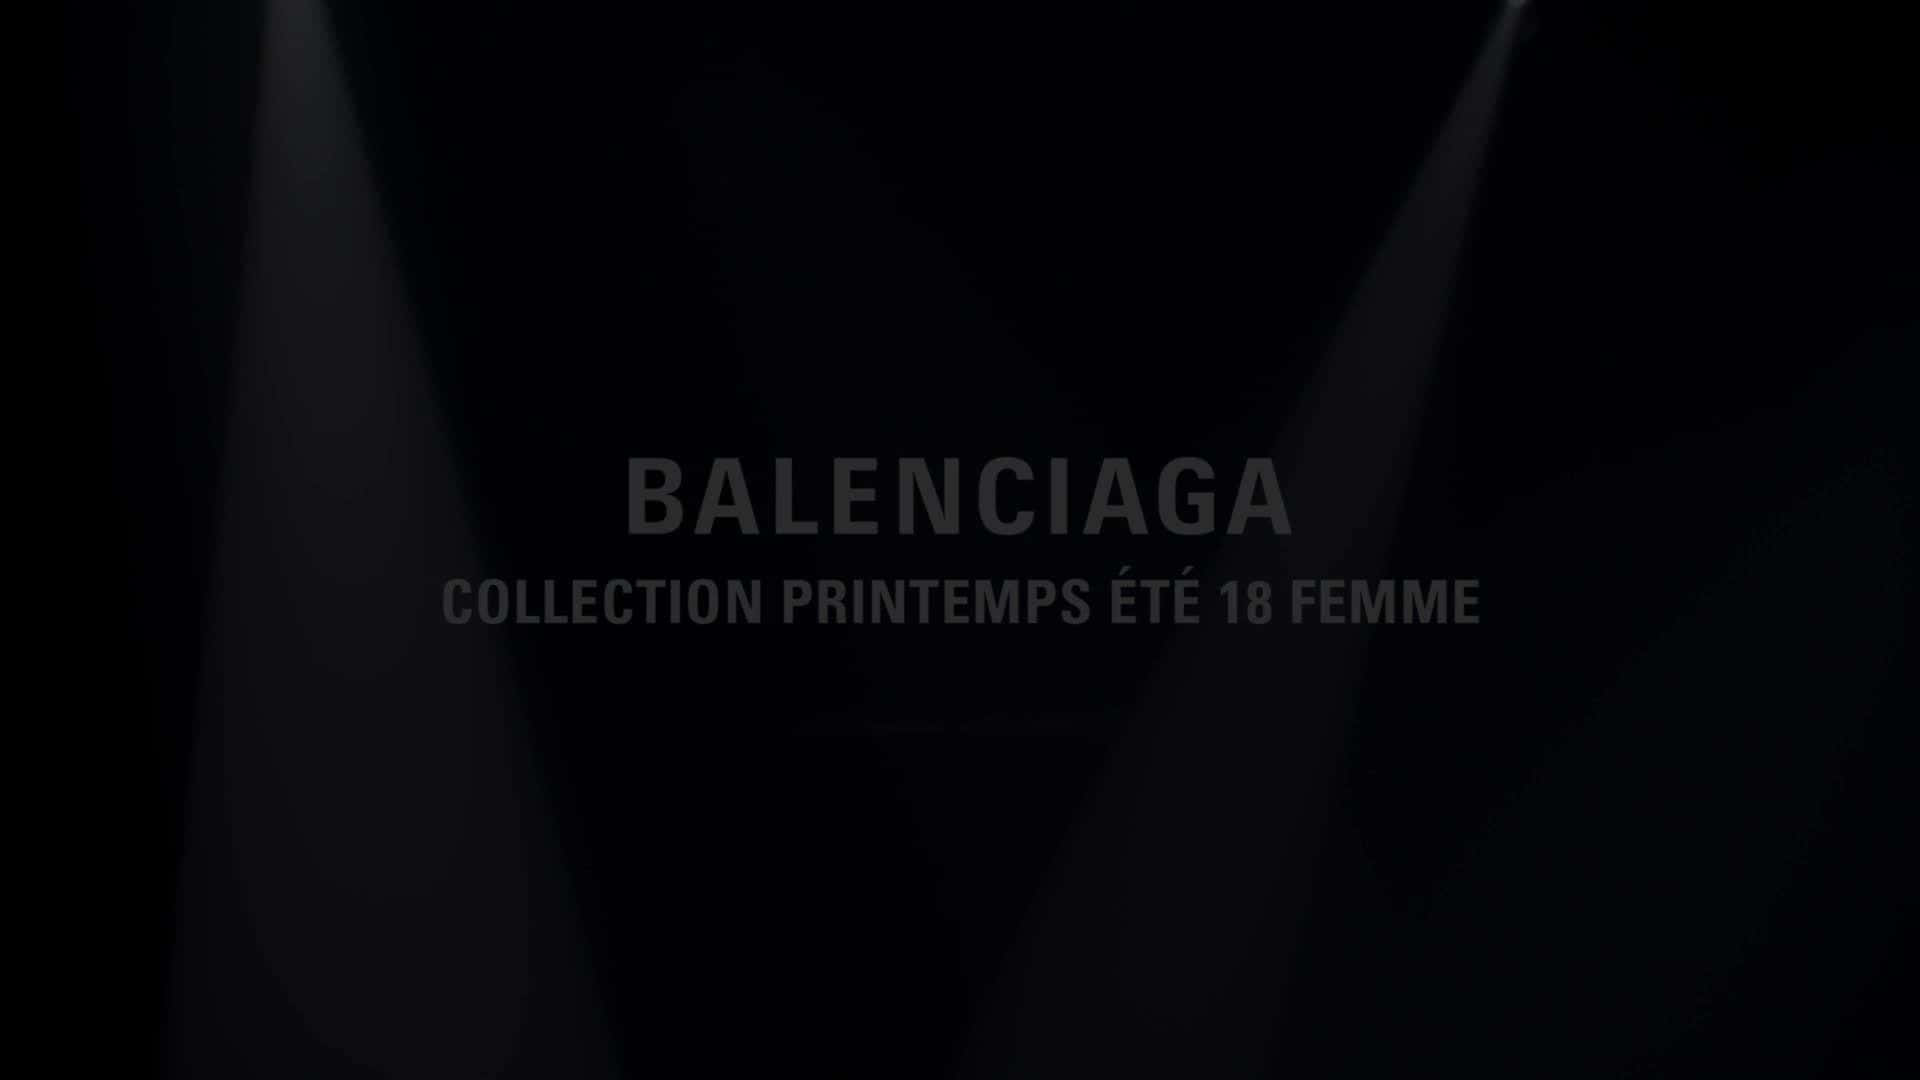 High fashion sophistication at Balenciaga